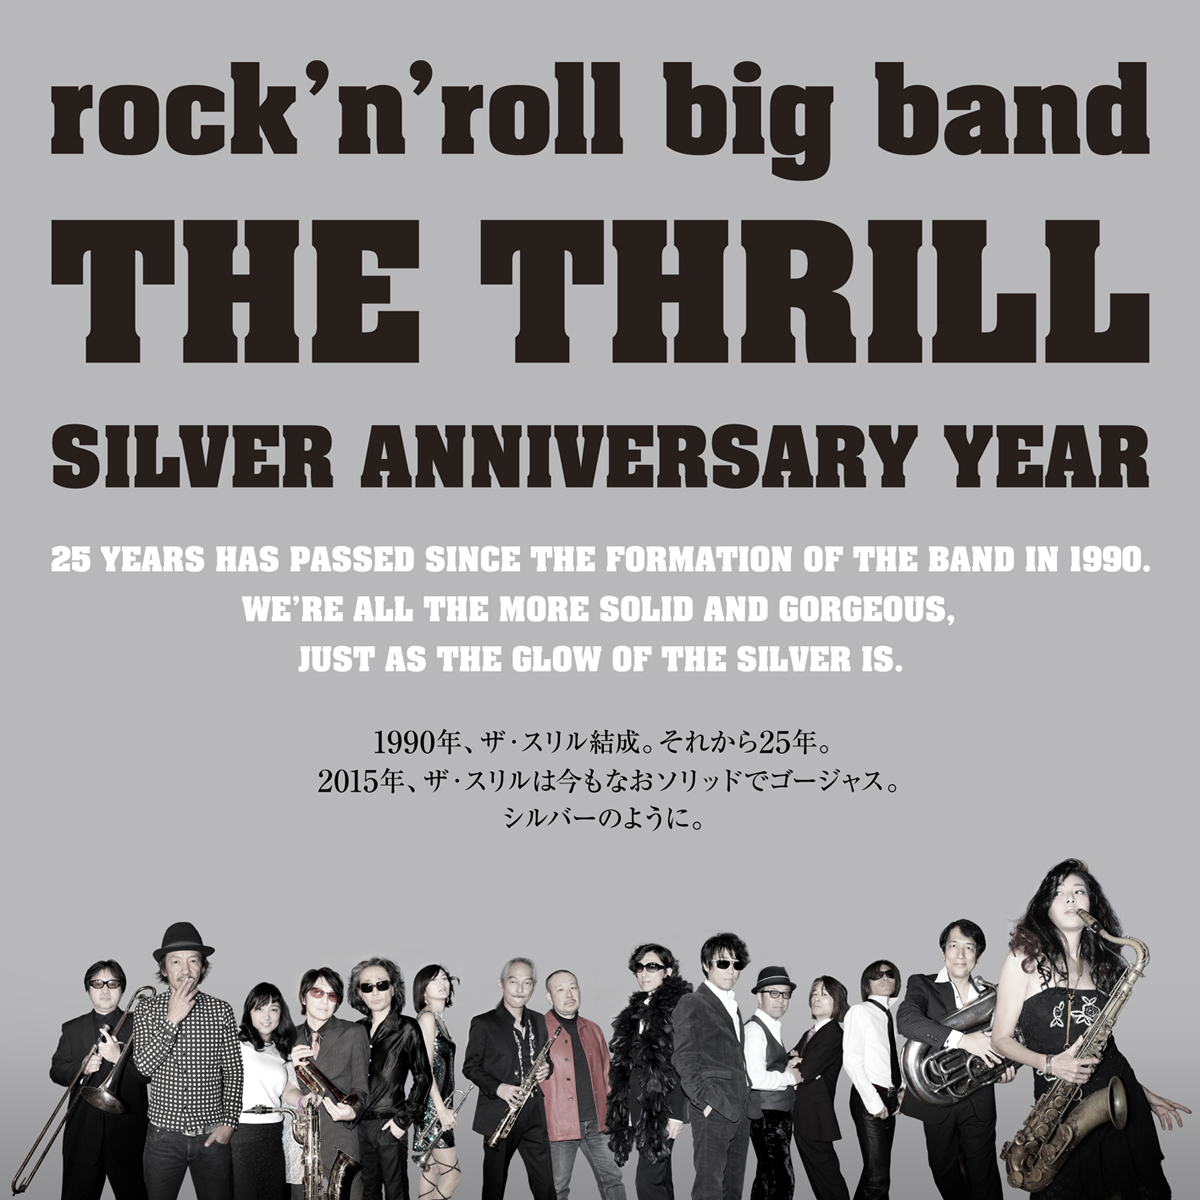 The Thrill “Silver Anniversary”